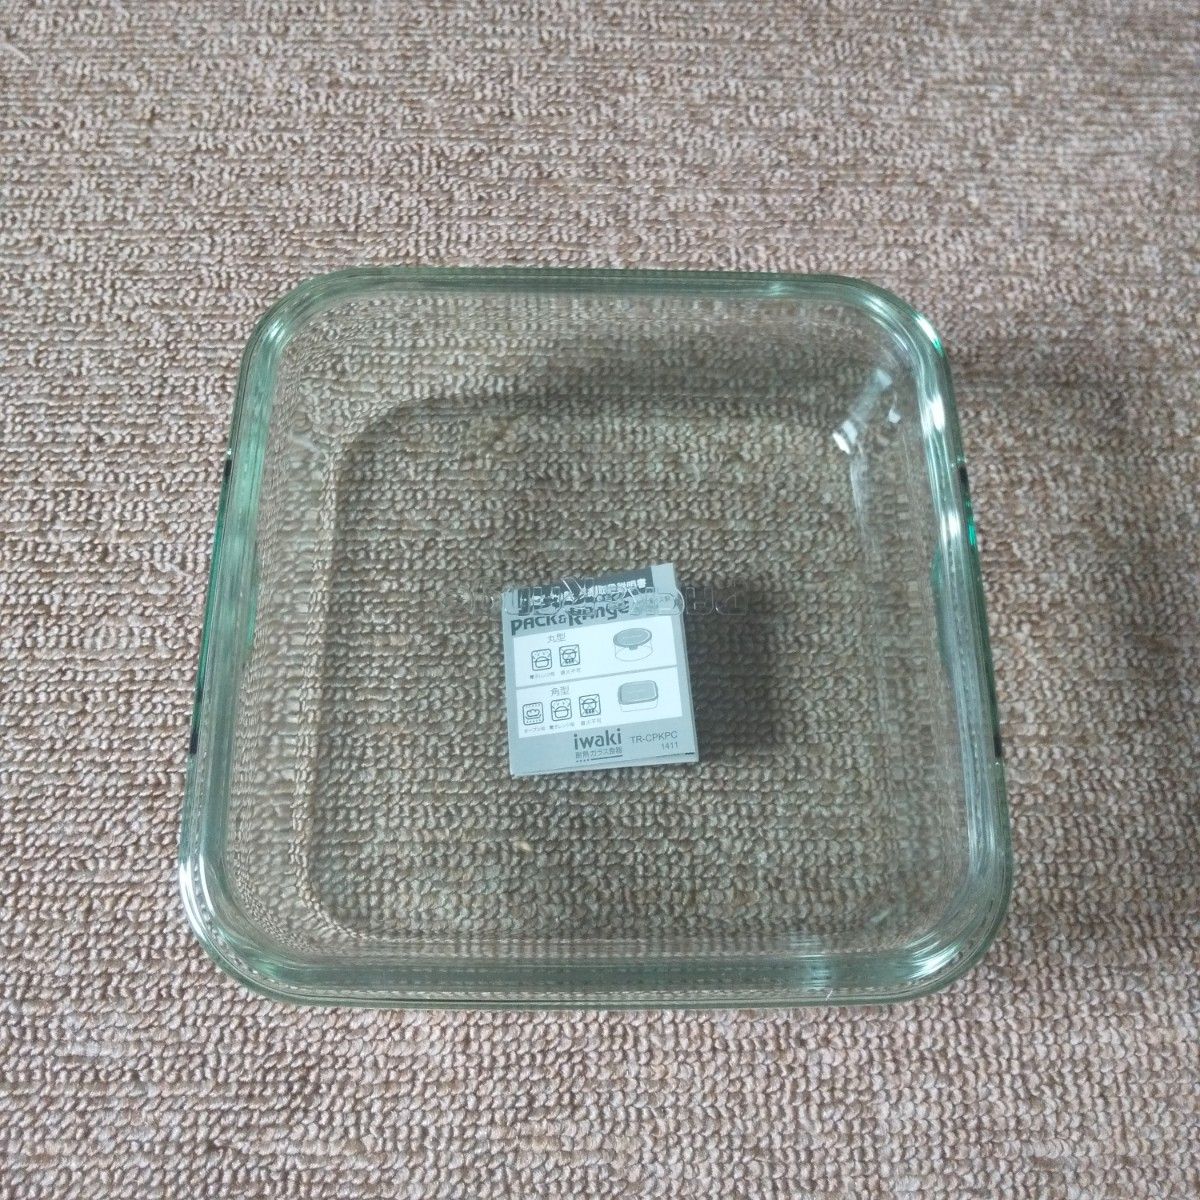 iwaki(イワキ) 耐熱ガラス 保存容器 